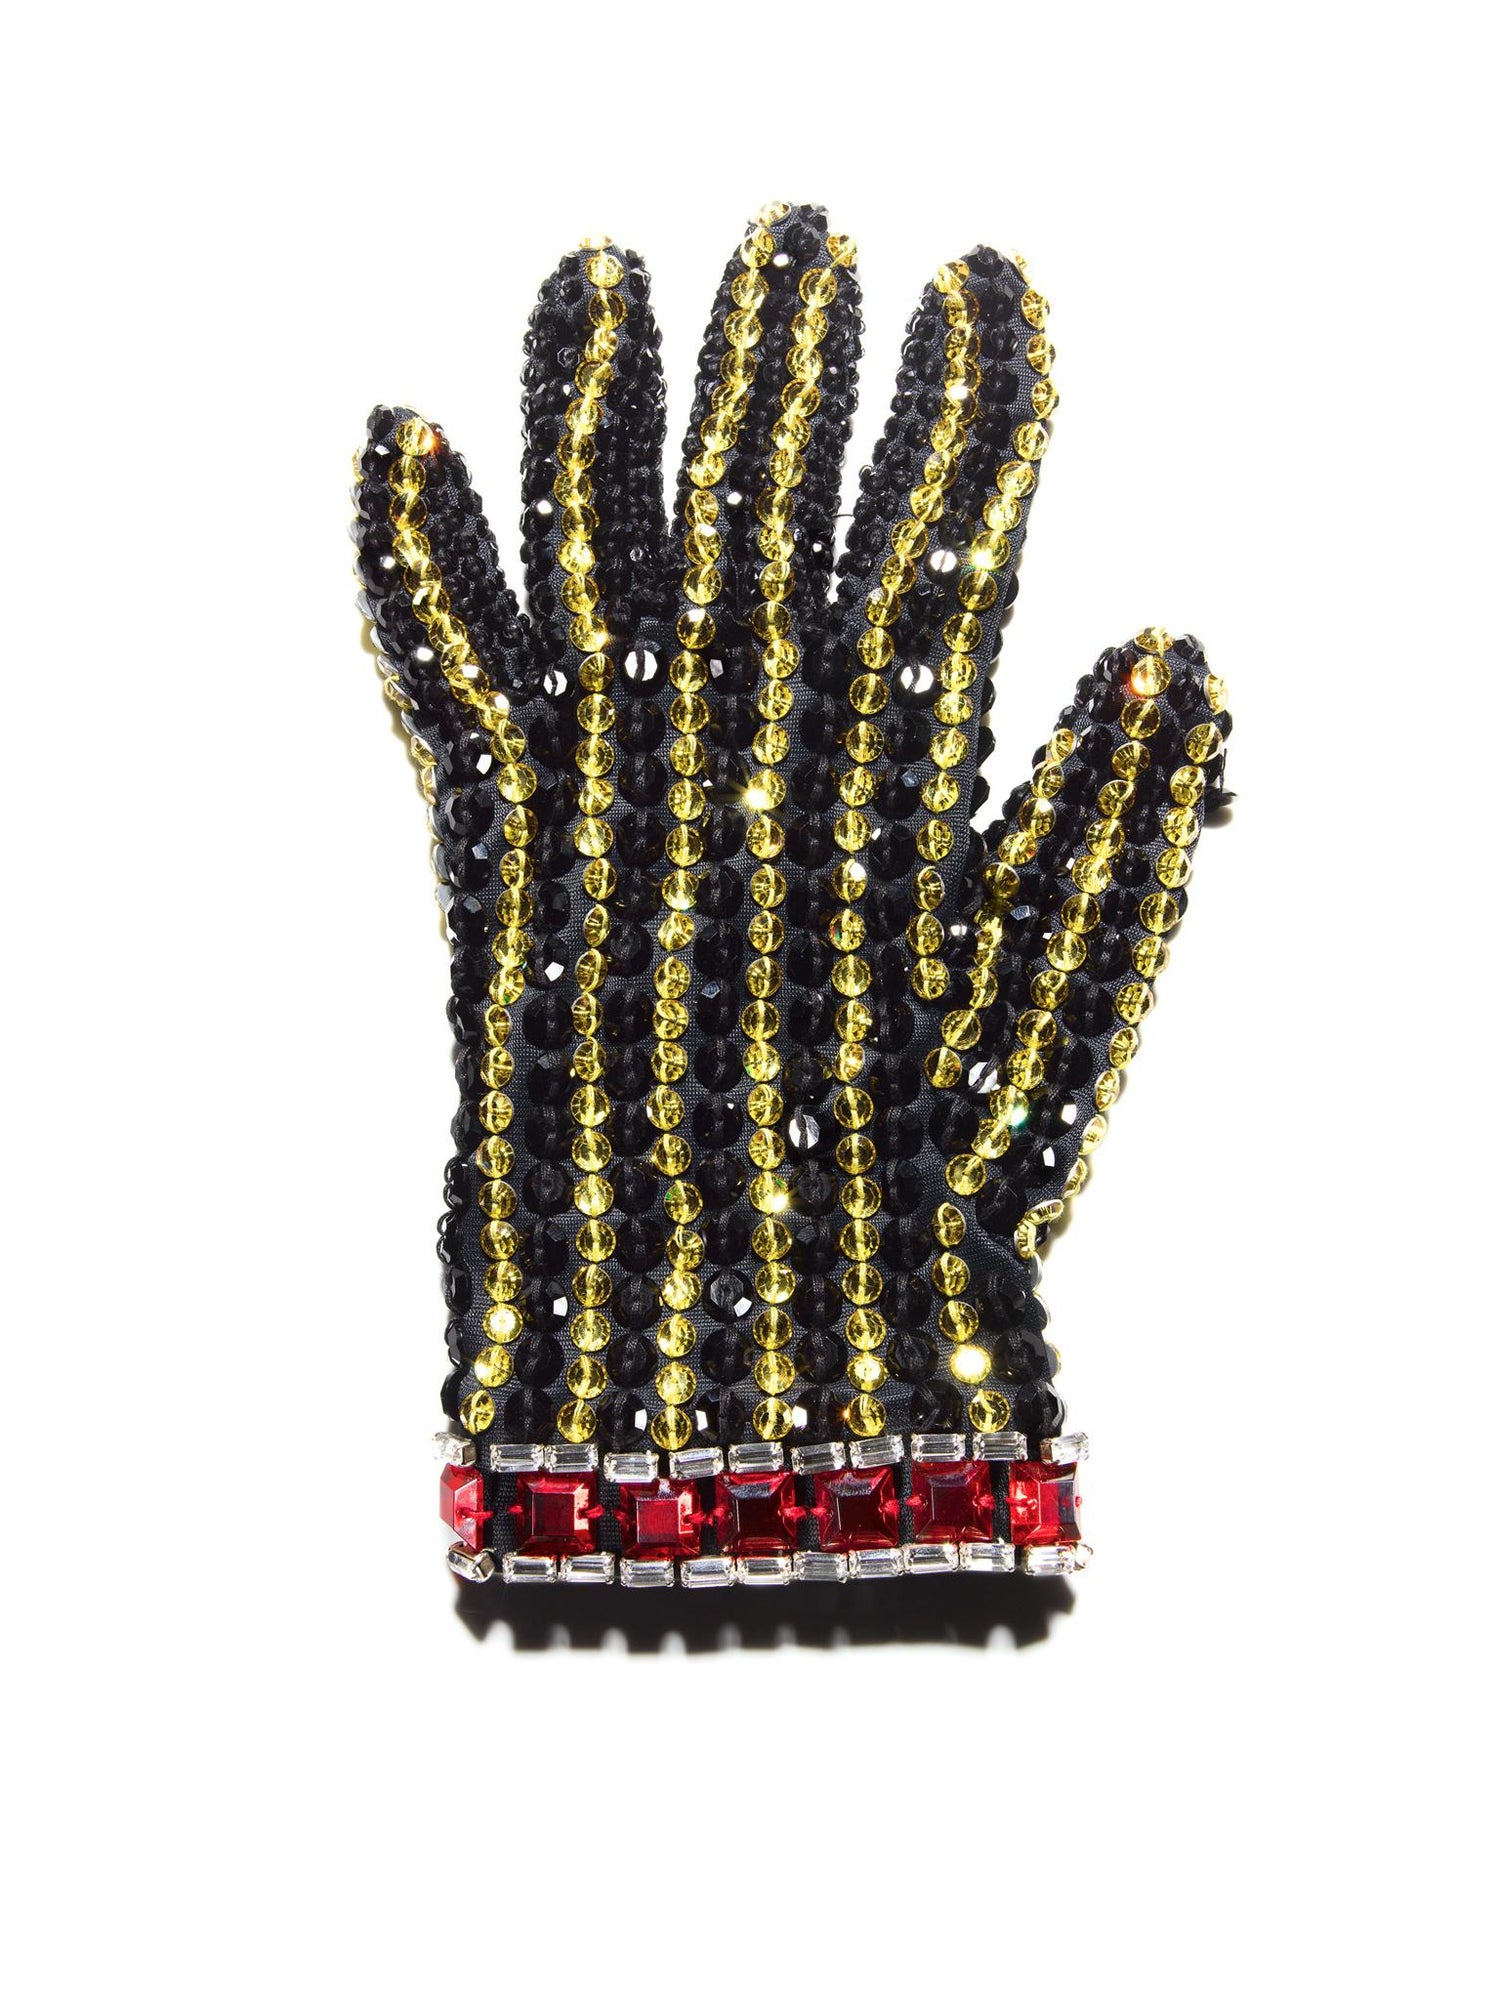 Michael Jackson Glove - 10 For Sale on 1stDibs  michael jackson gloves  price, michael jackson rhinestone glove, michael jackson original glove